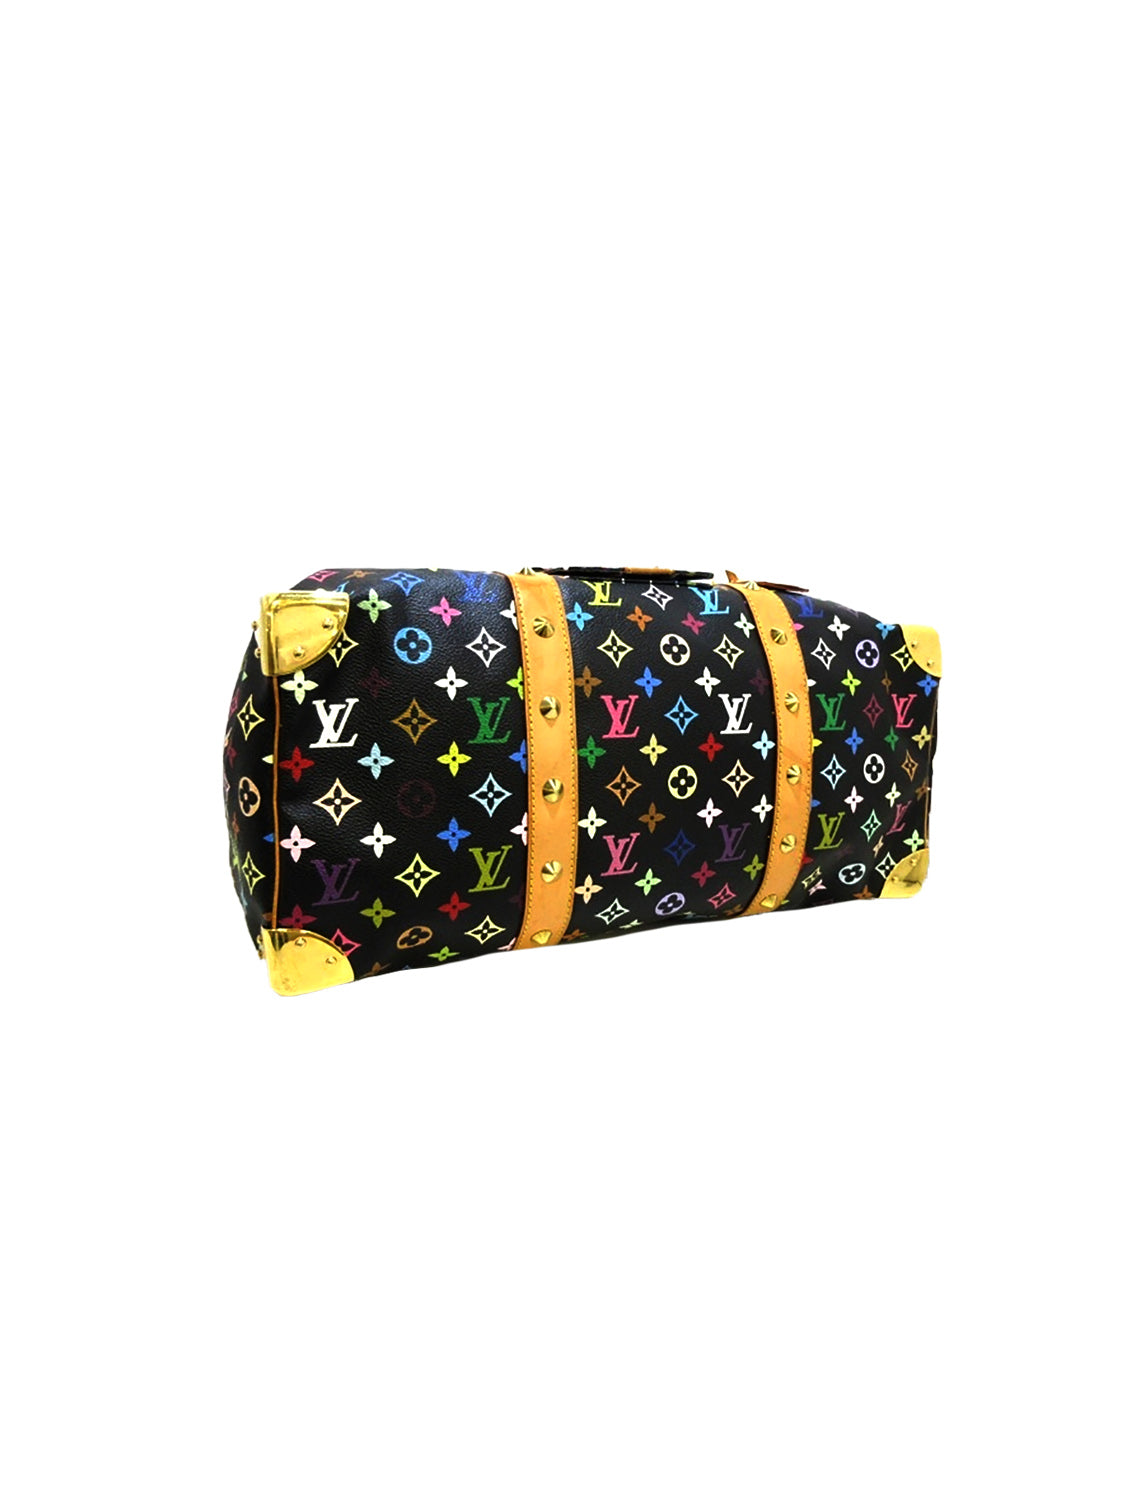 Rare Bag Reveal: Louis Vuitton Murakami Multicolore Gracie Noir